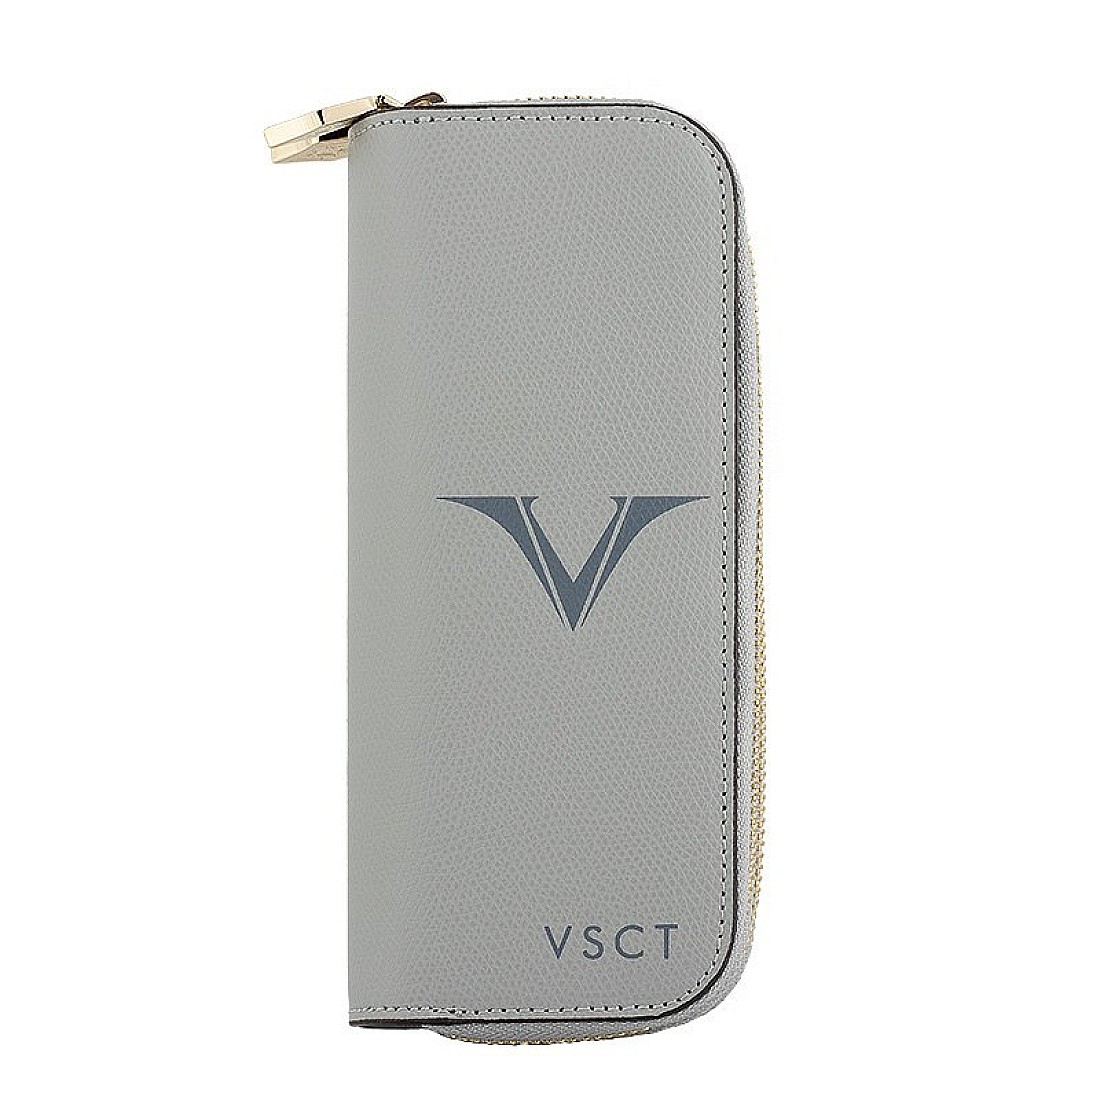 Visconti VSCT 4 Pen Leather Pen Case Grey